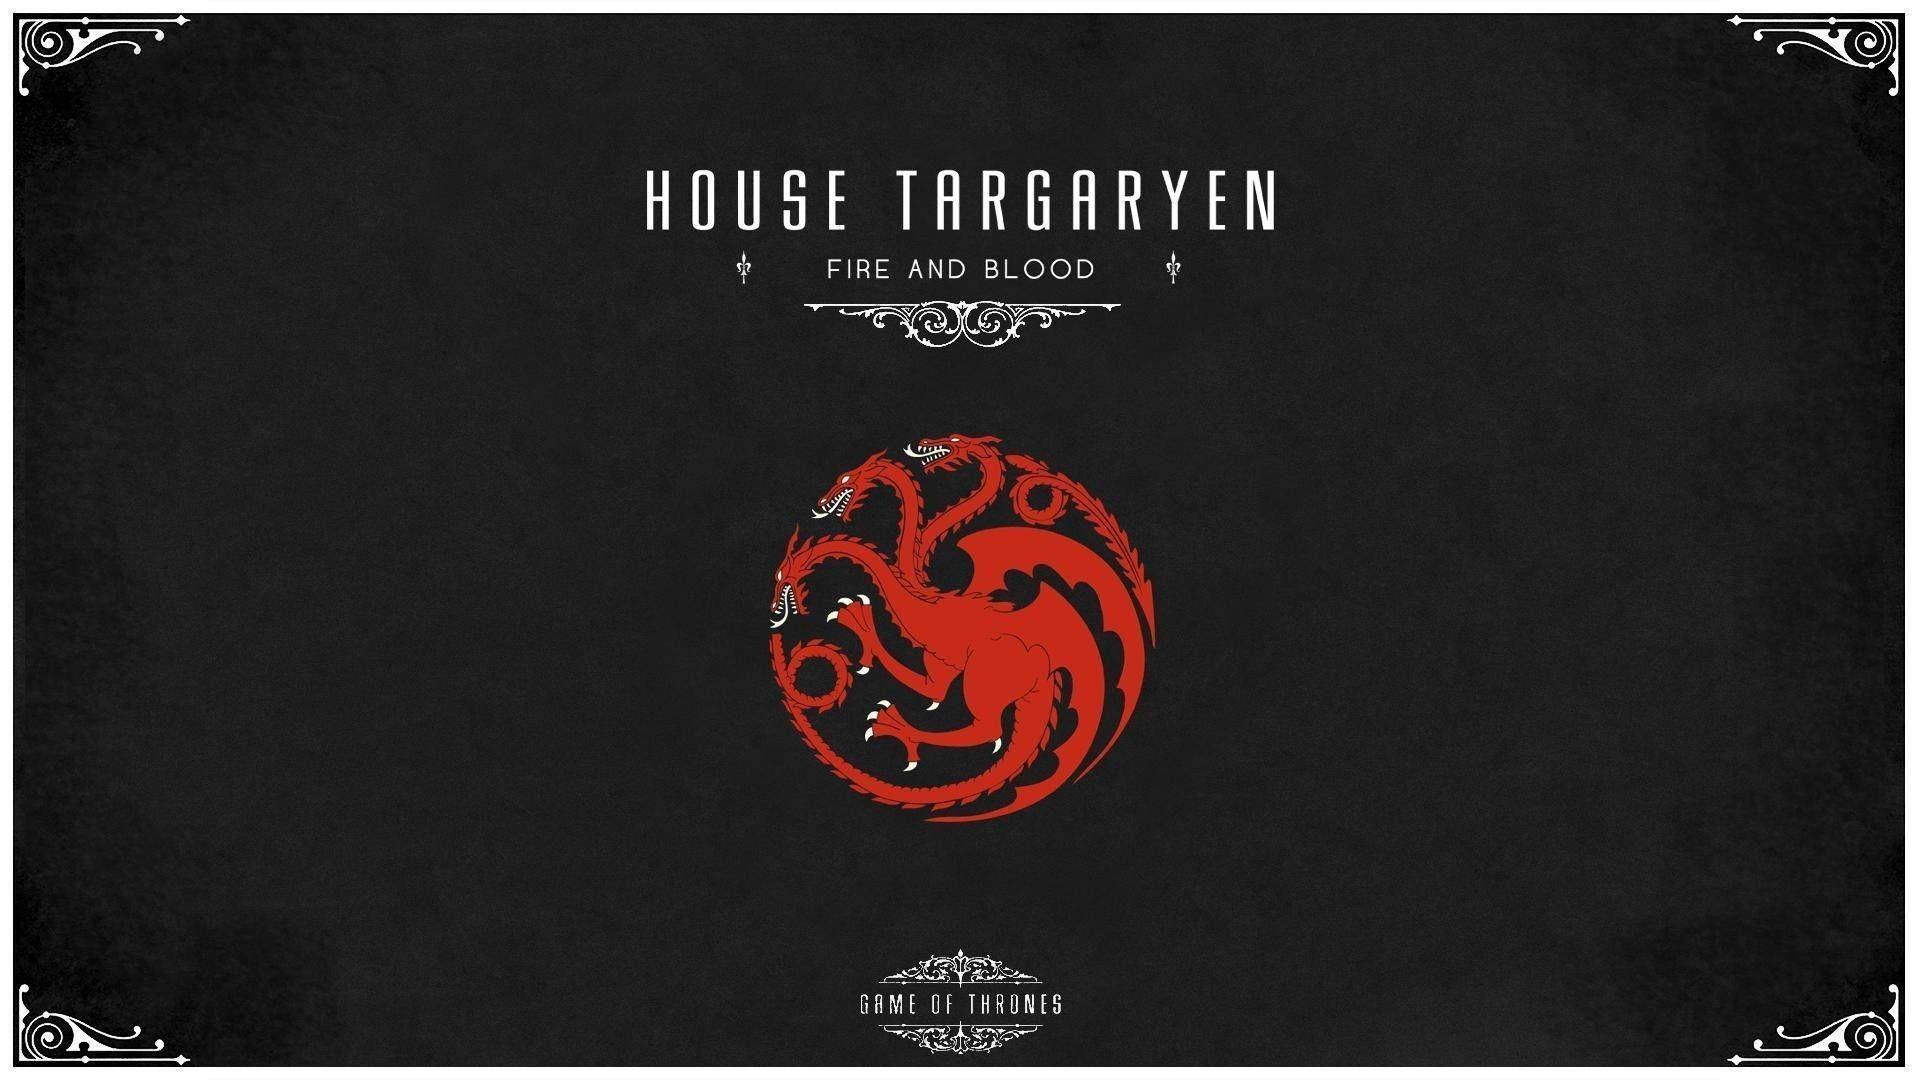 House Targaryen Got